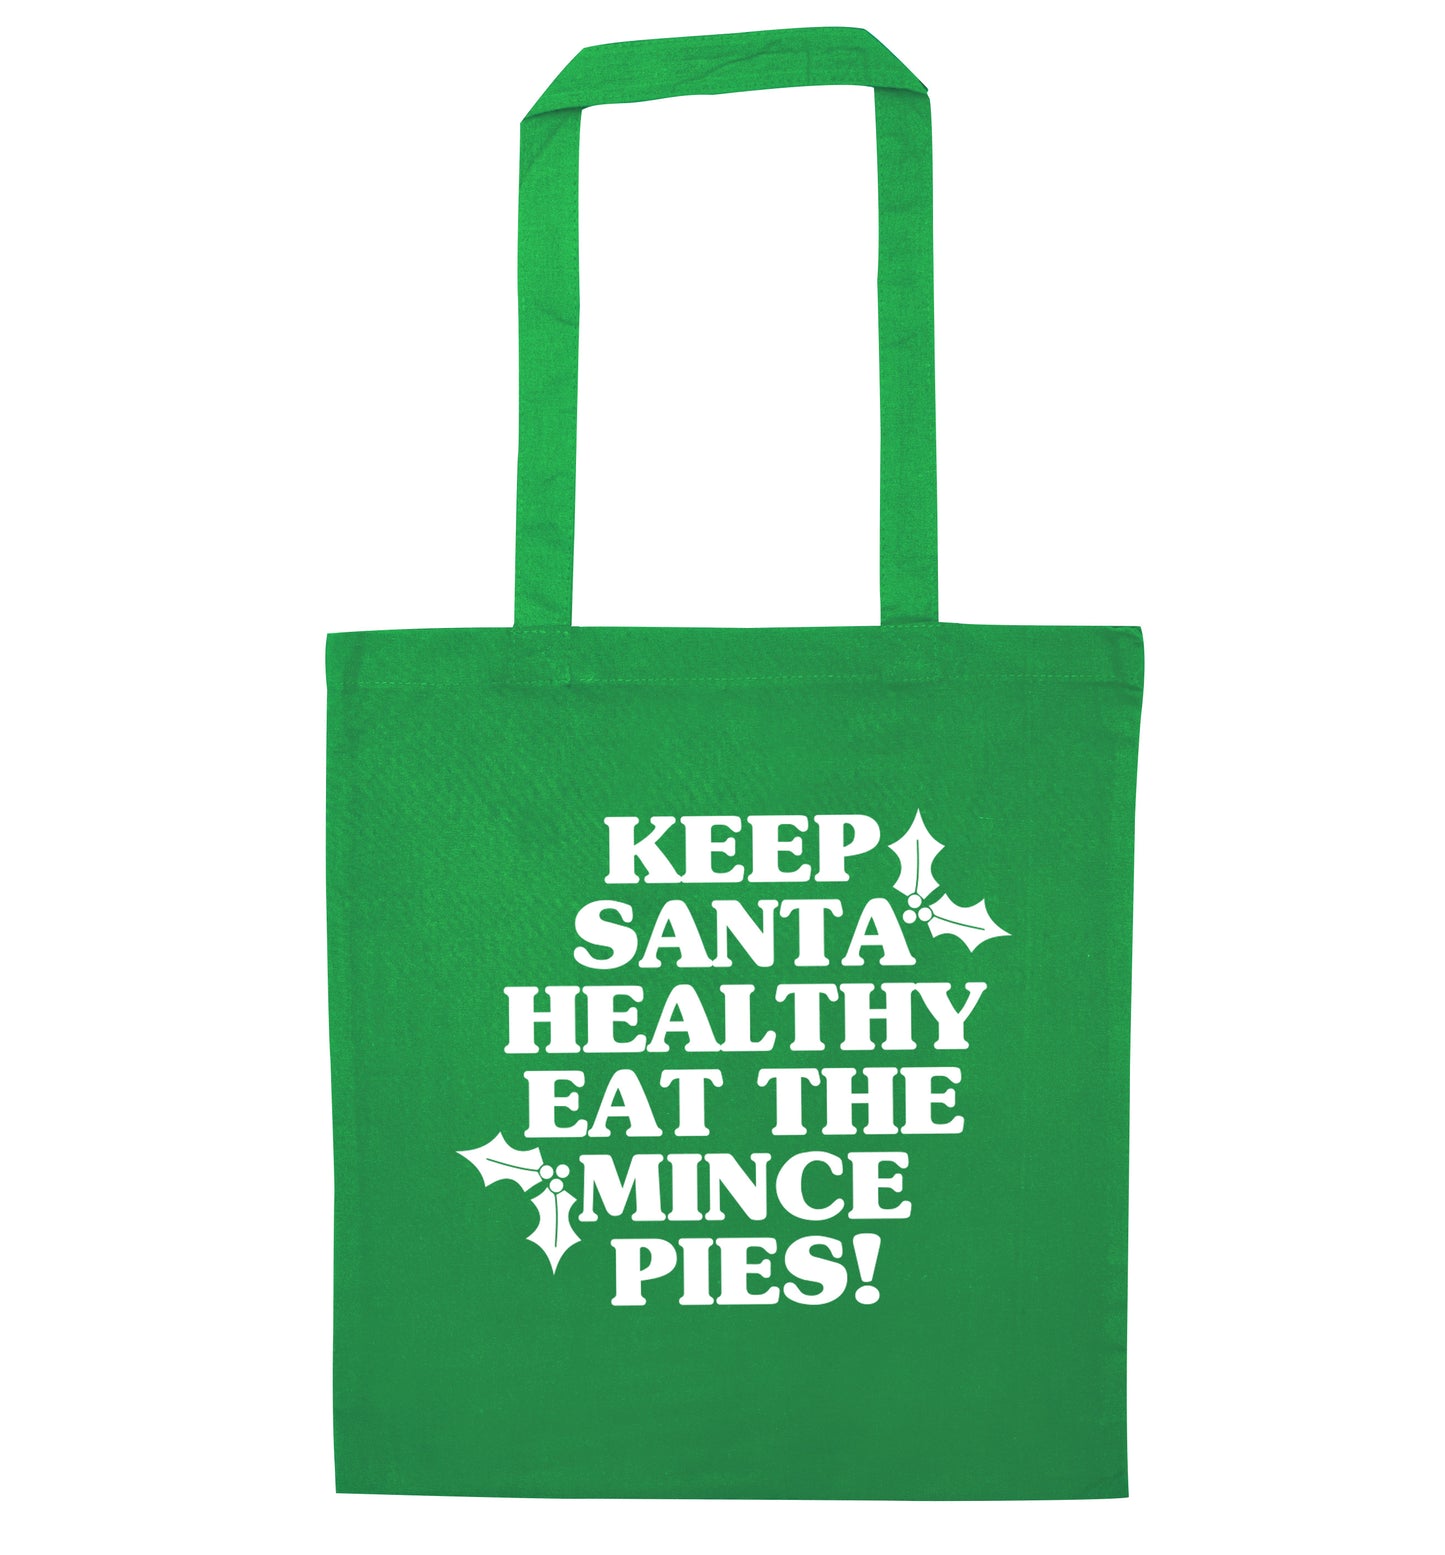 Keep santa healthy eat the mince pies green tote bag